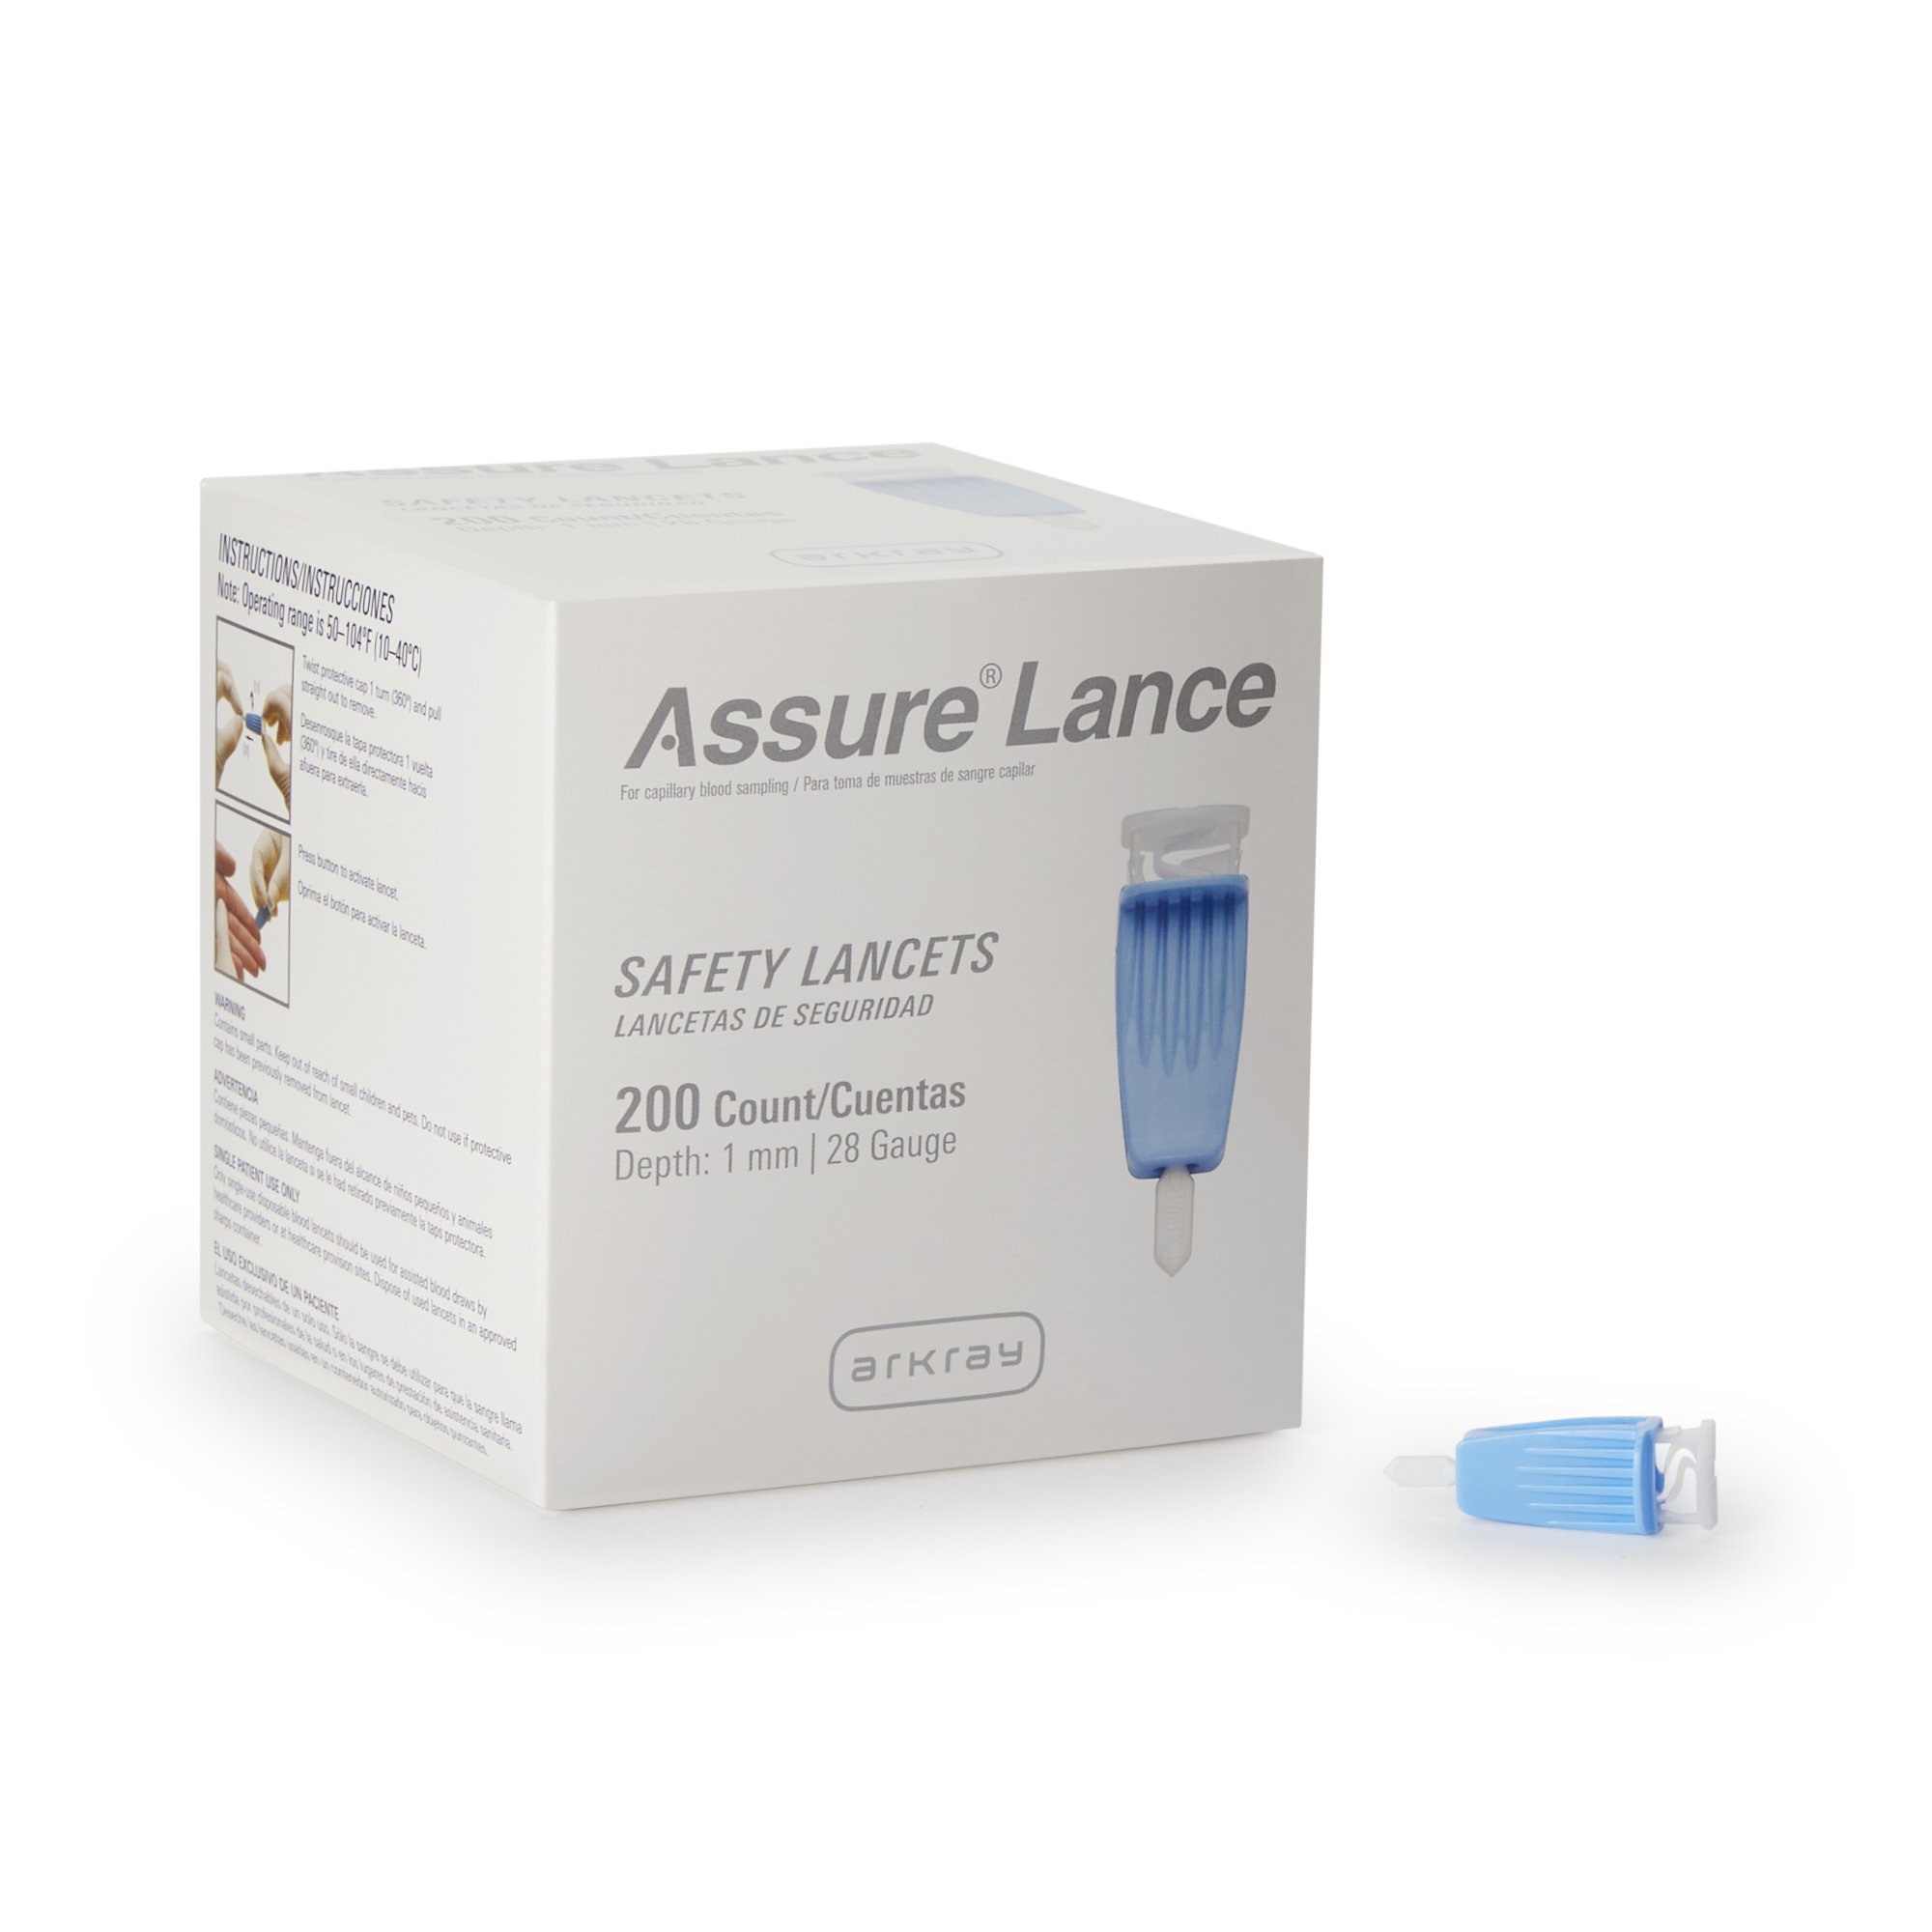 One Drop for Diabetes Starter Kit with Bluetooth-Enabled Glucose Meter,  Chrome/Black/Orange, 1 Lancing Device, 33-Gauge Lancets (10 Count), Test